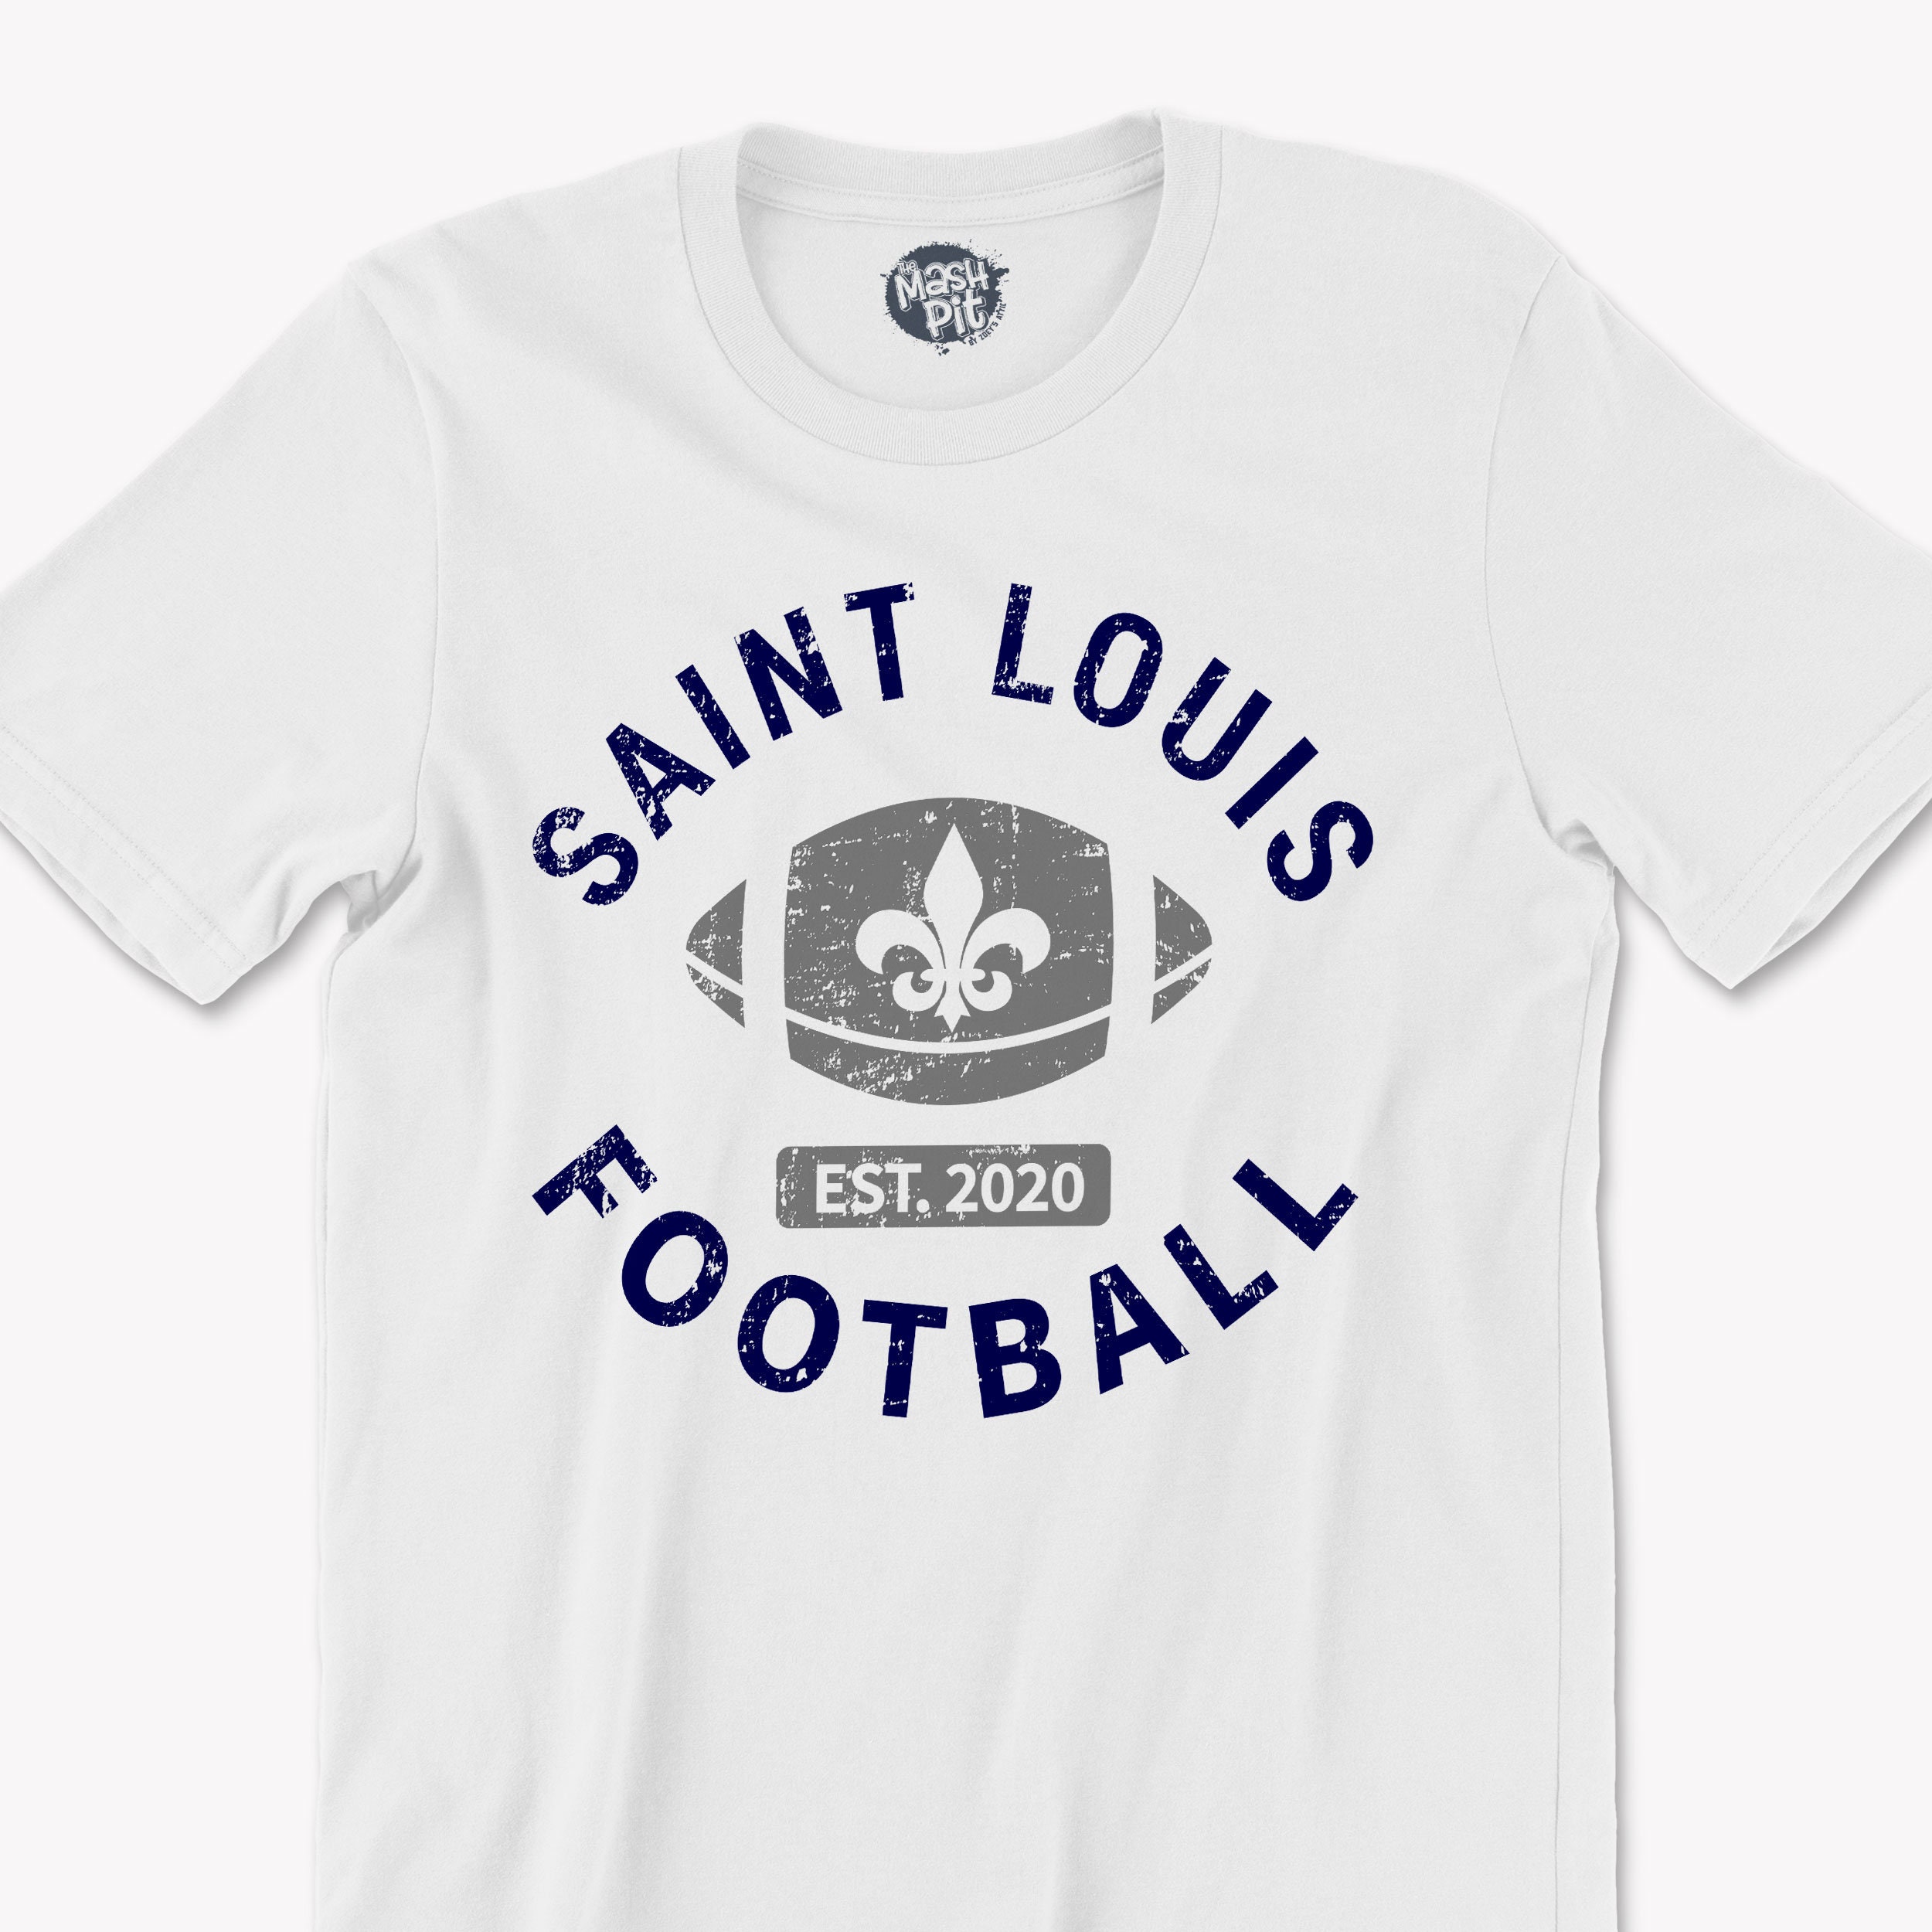 Battlehawks Ka-kaw St-Louis Shirt Sweatshirt Hoodie Football Season 2020  Hoodie (Navy;S) : : Clothing & Accessories